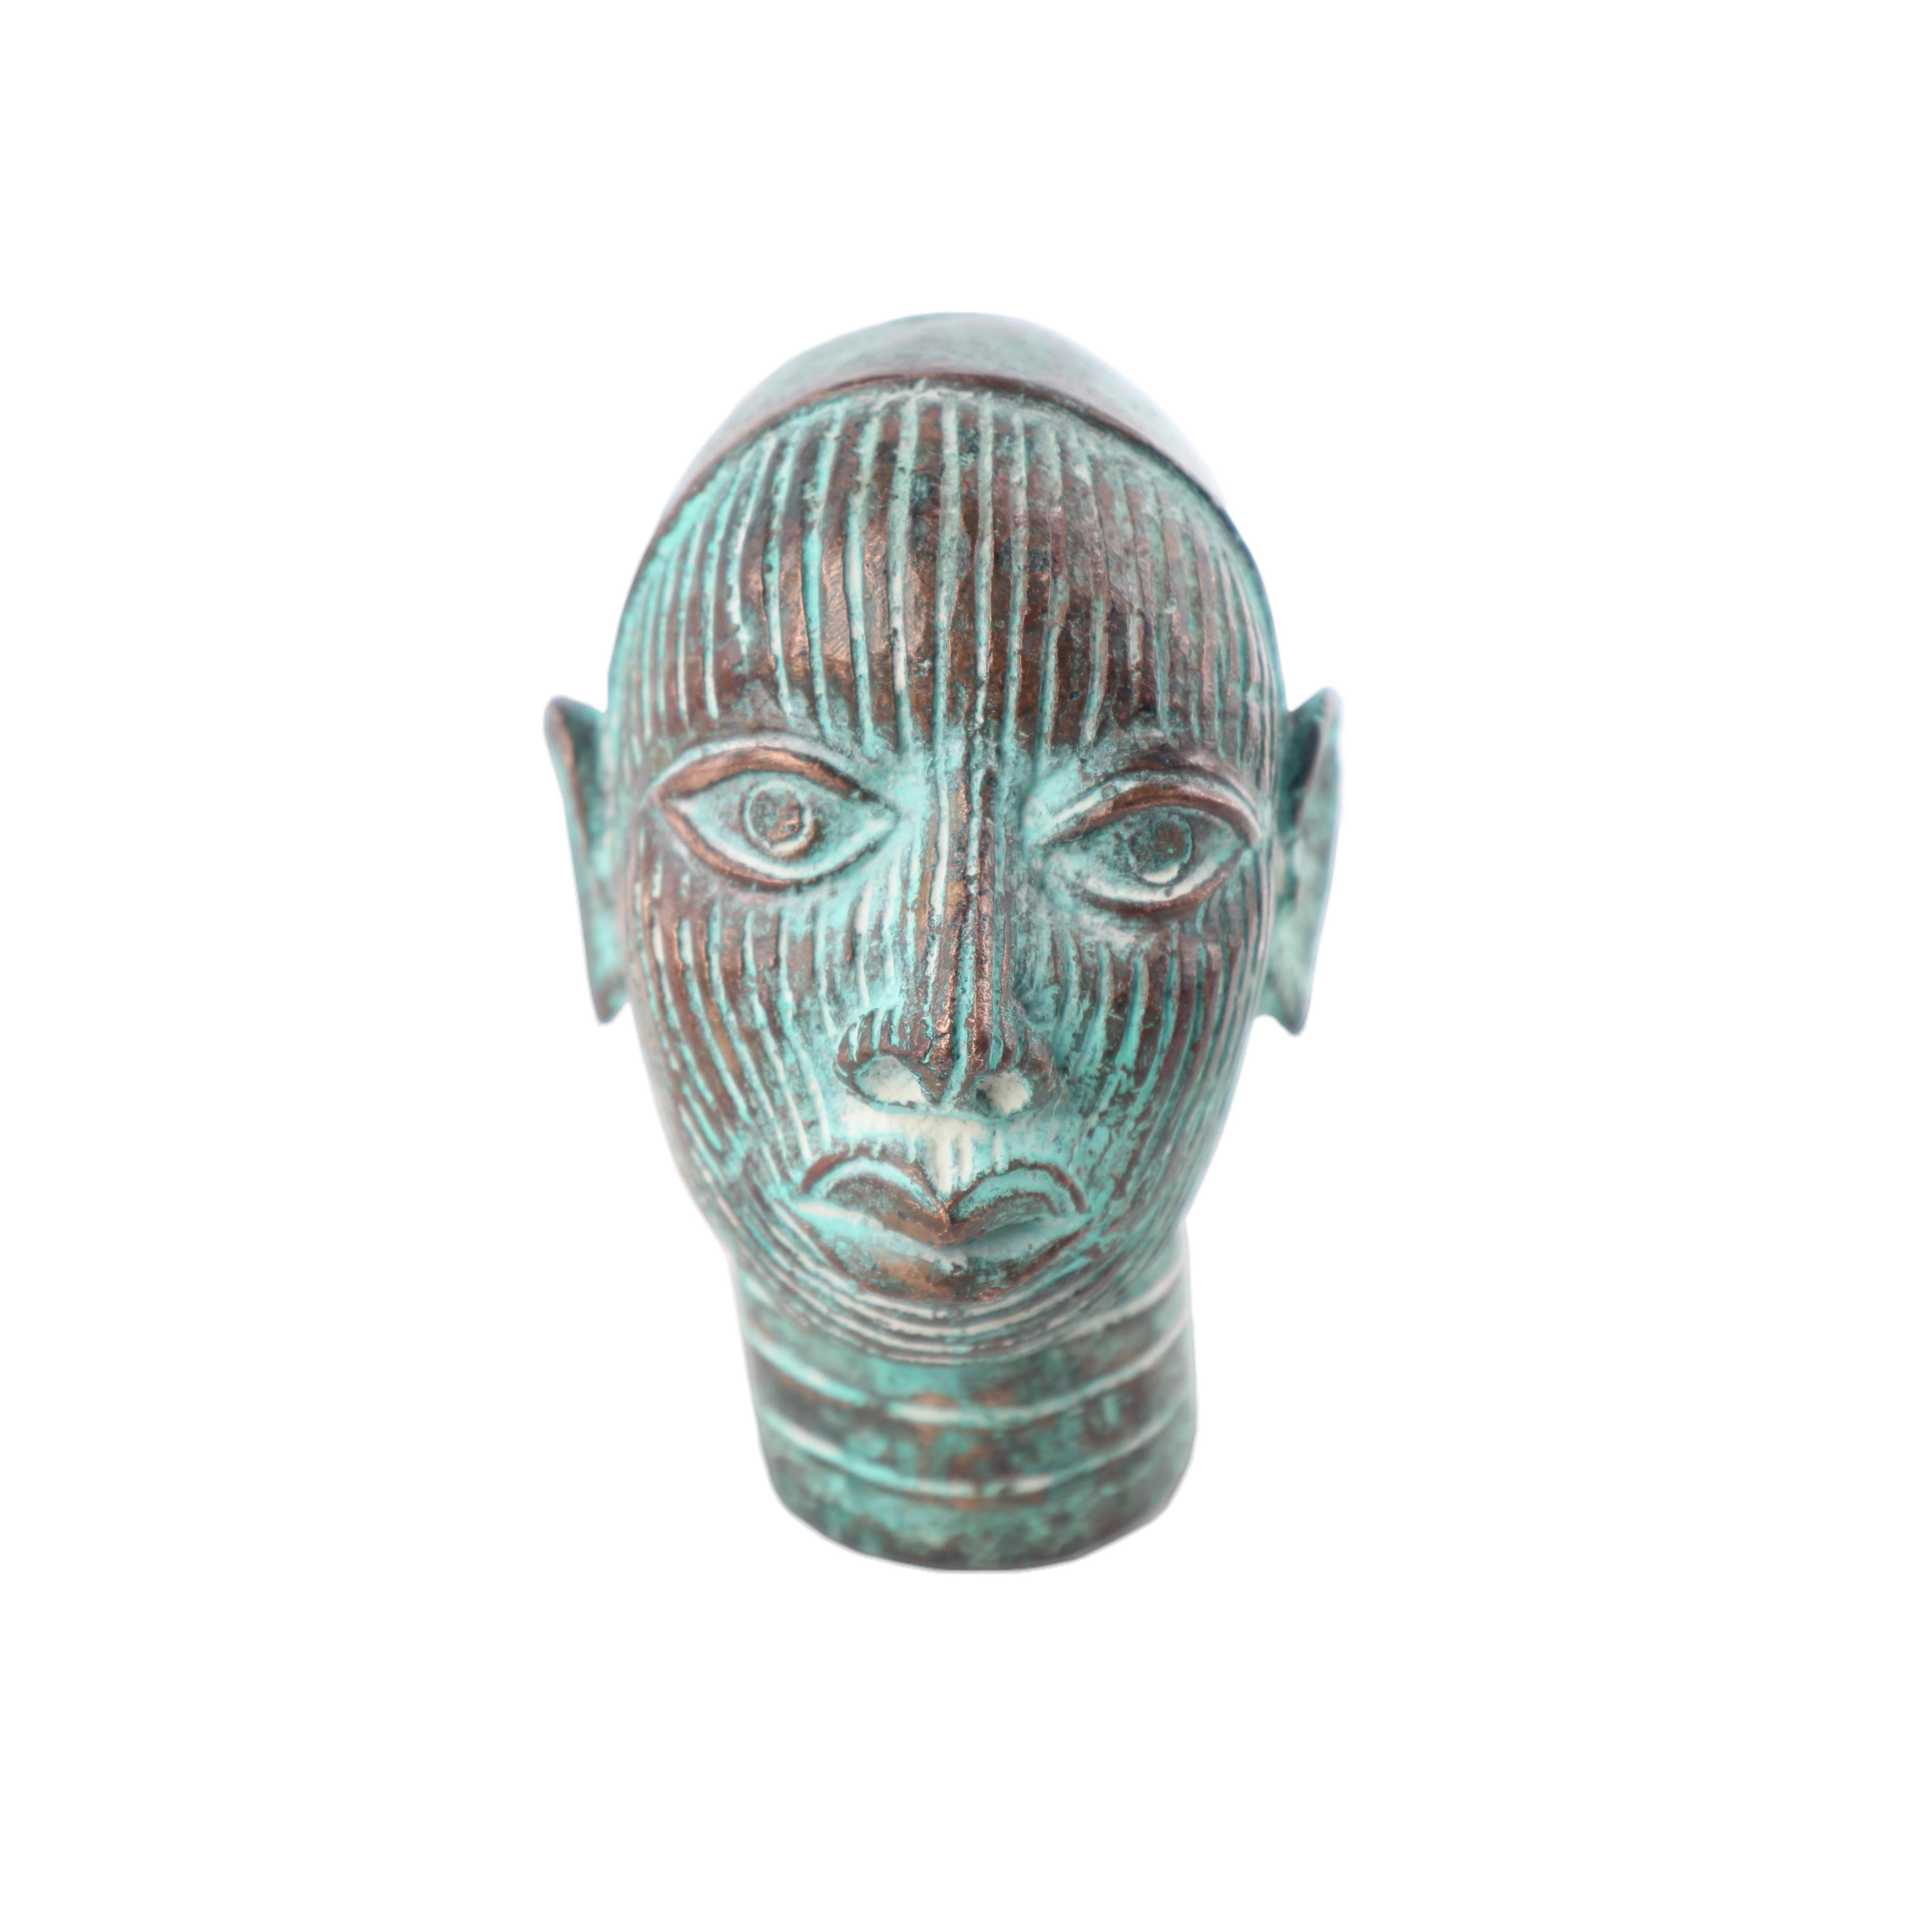 Yoruba Tribe Heads ~6.7" Tall